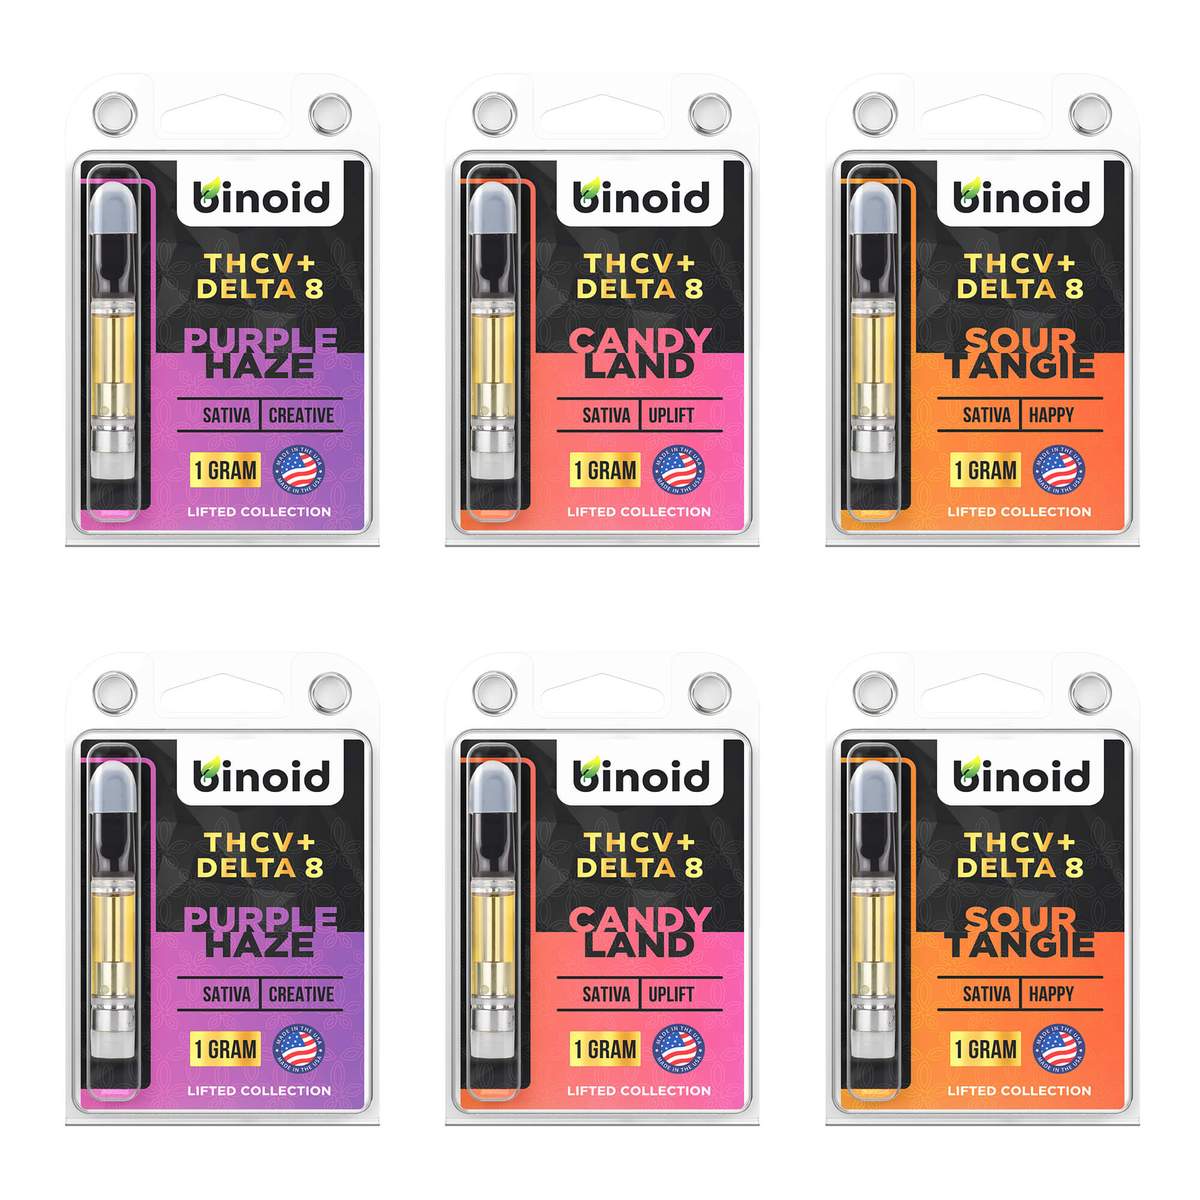 Binoid THCV + Delta 8 Vape Cartridge Bundle (3 packs) images